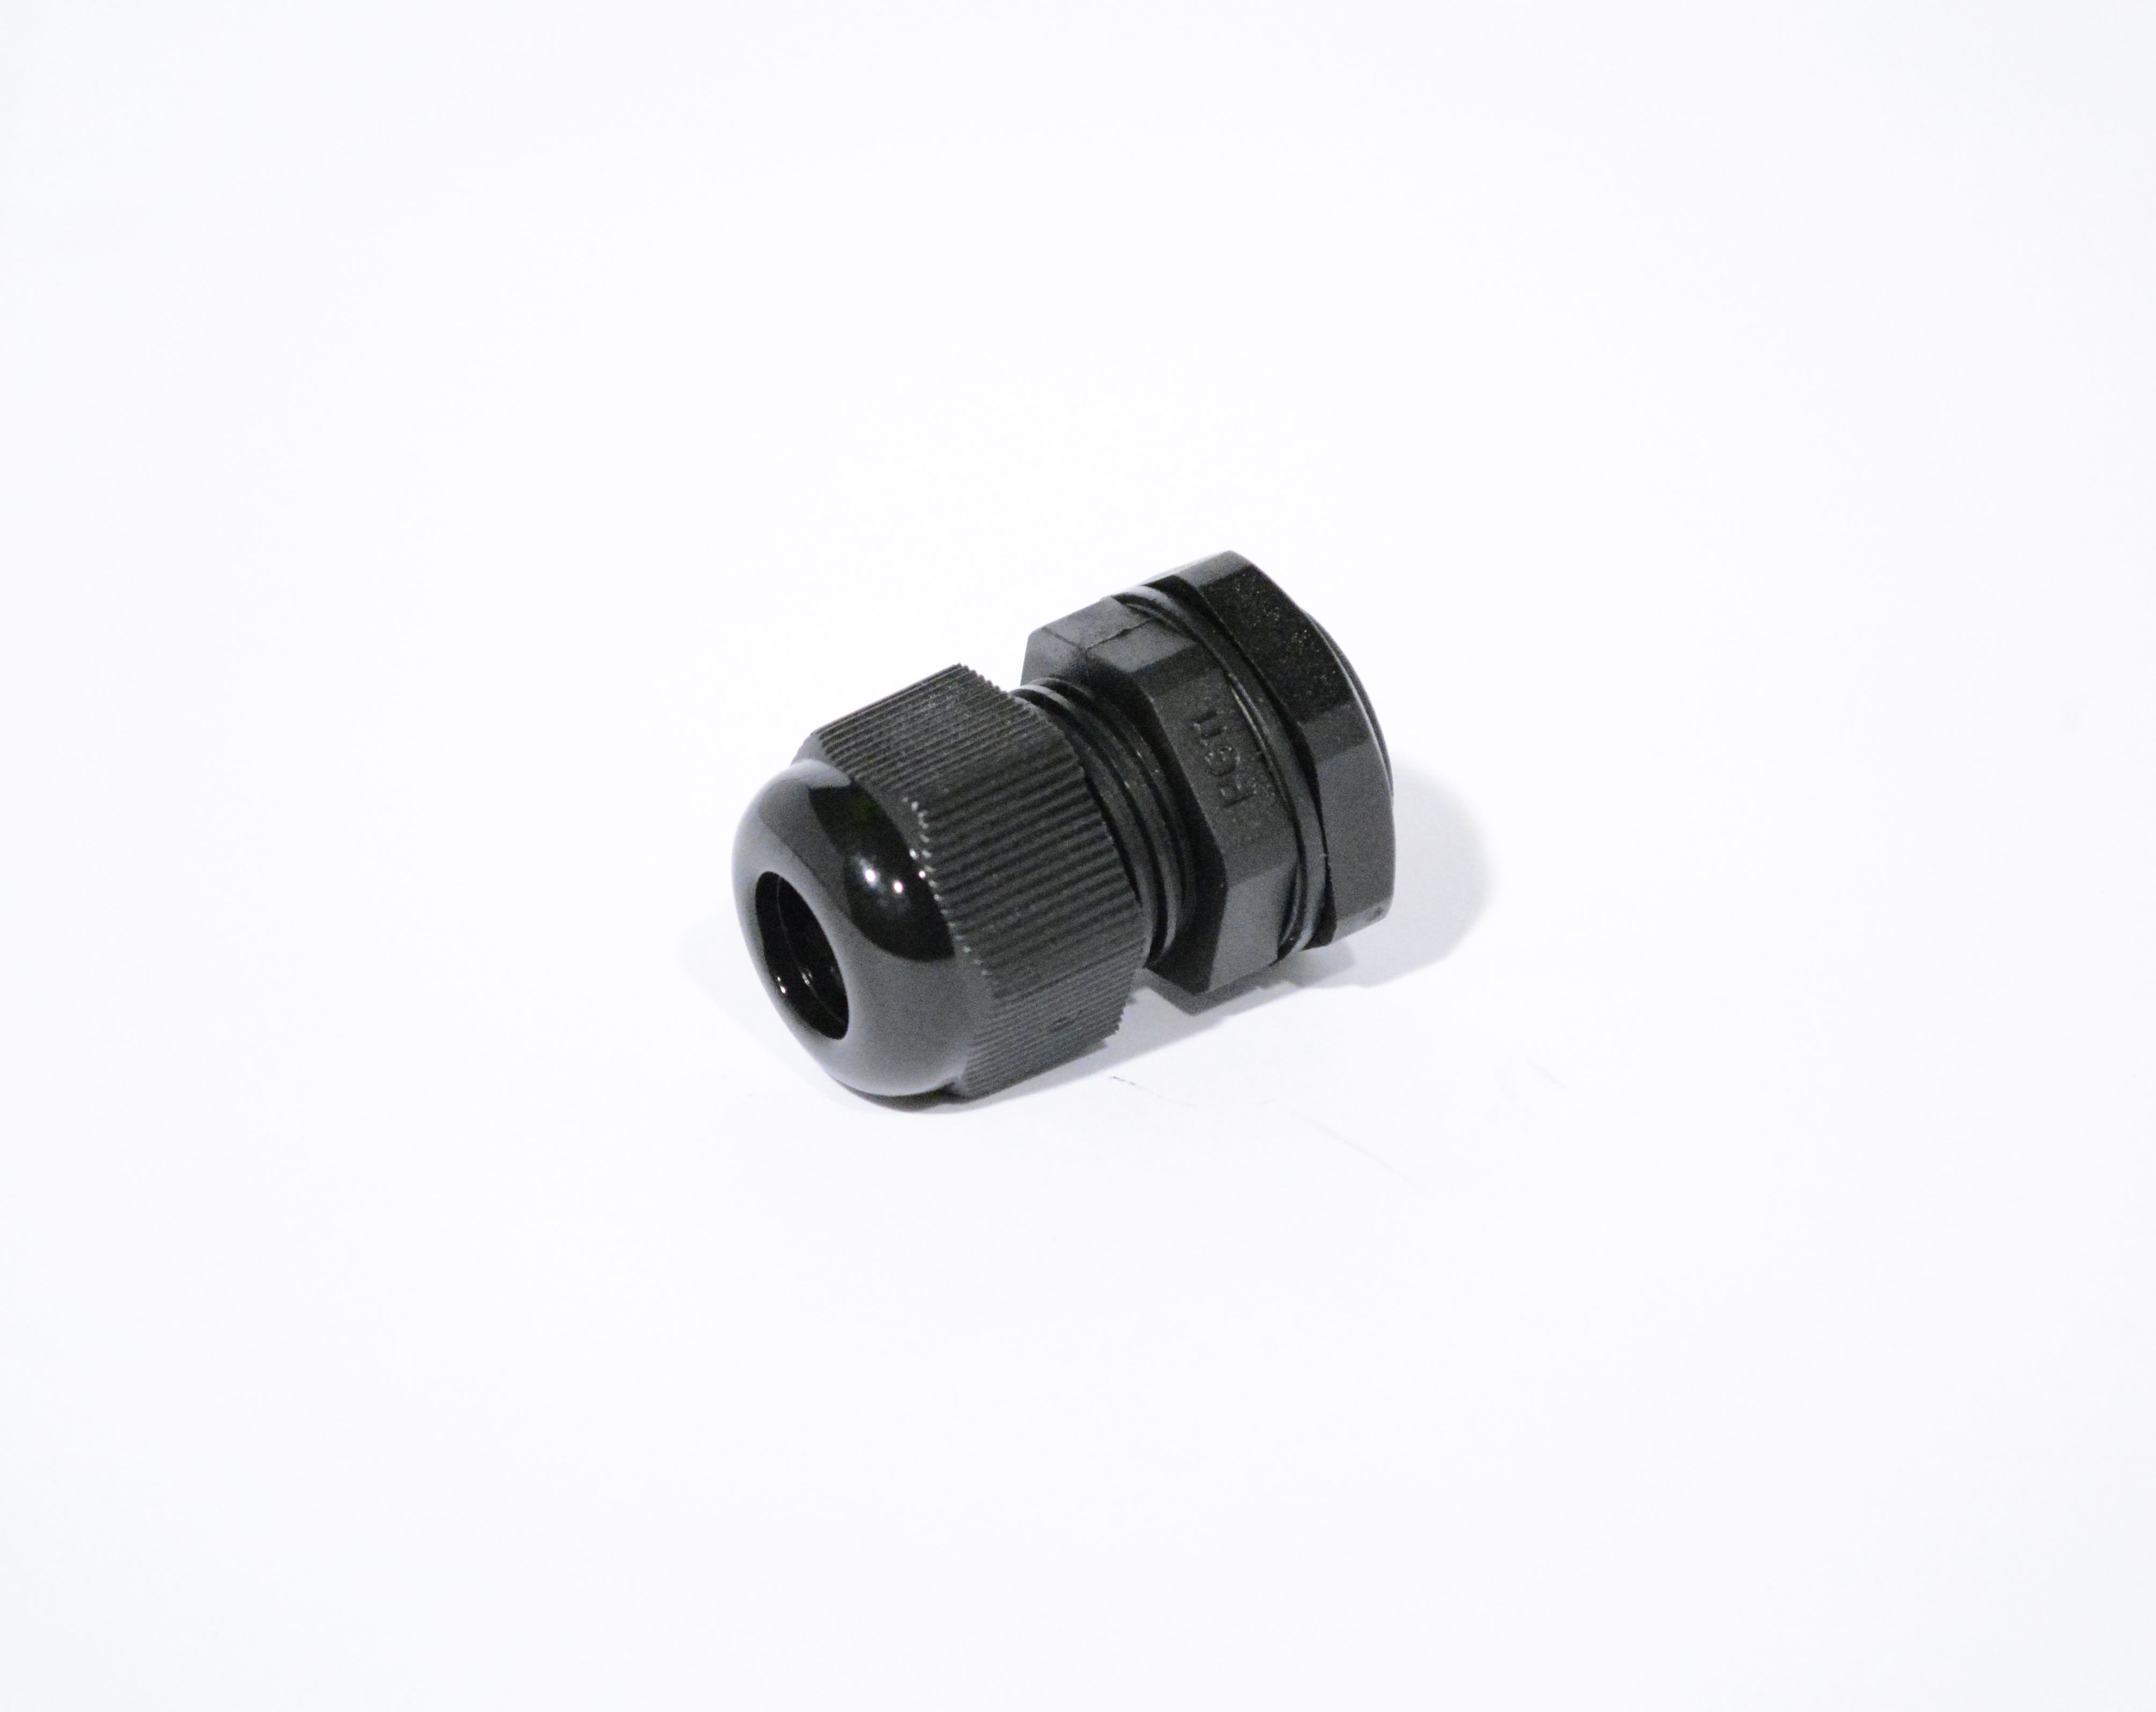 2pcs PG11 Waterproof Connector Gland Dia 5-10mm Cable Black #M1844 QL 